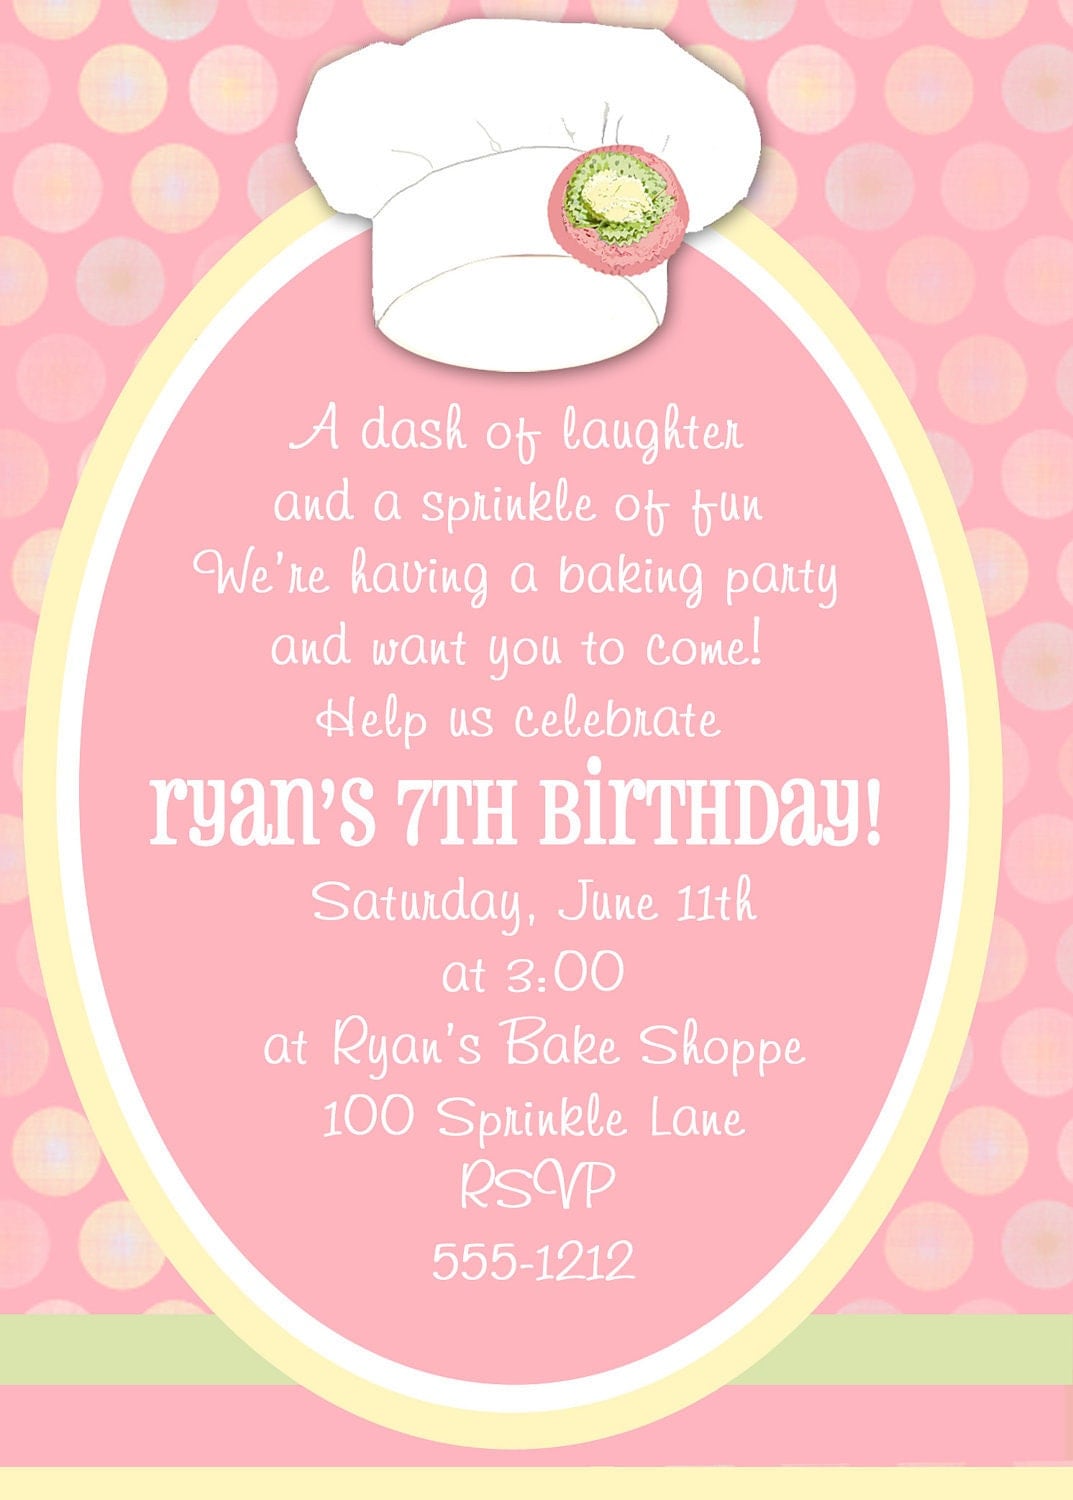 baking-party-invitations-by-jentbydesign-on-etsy